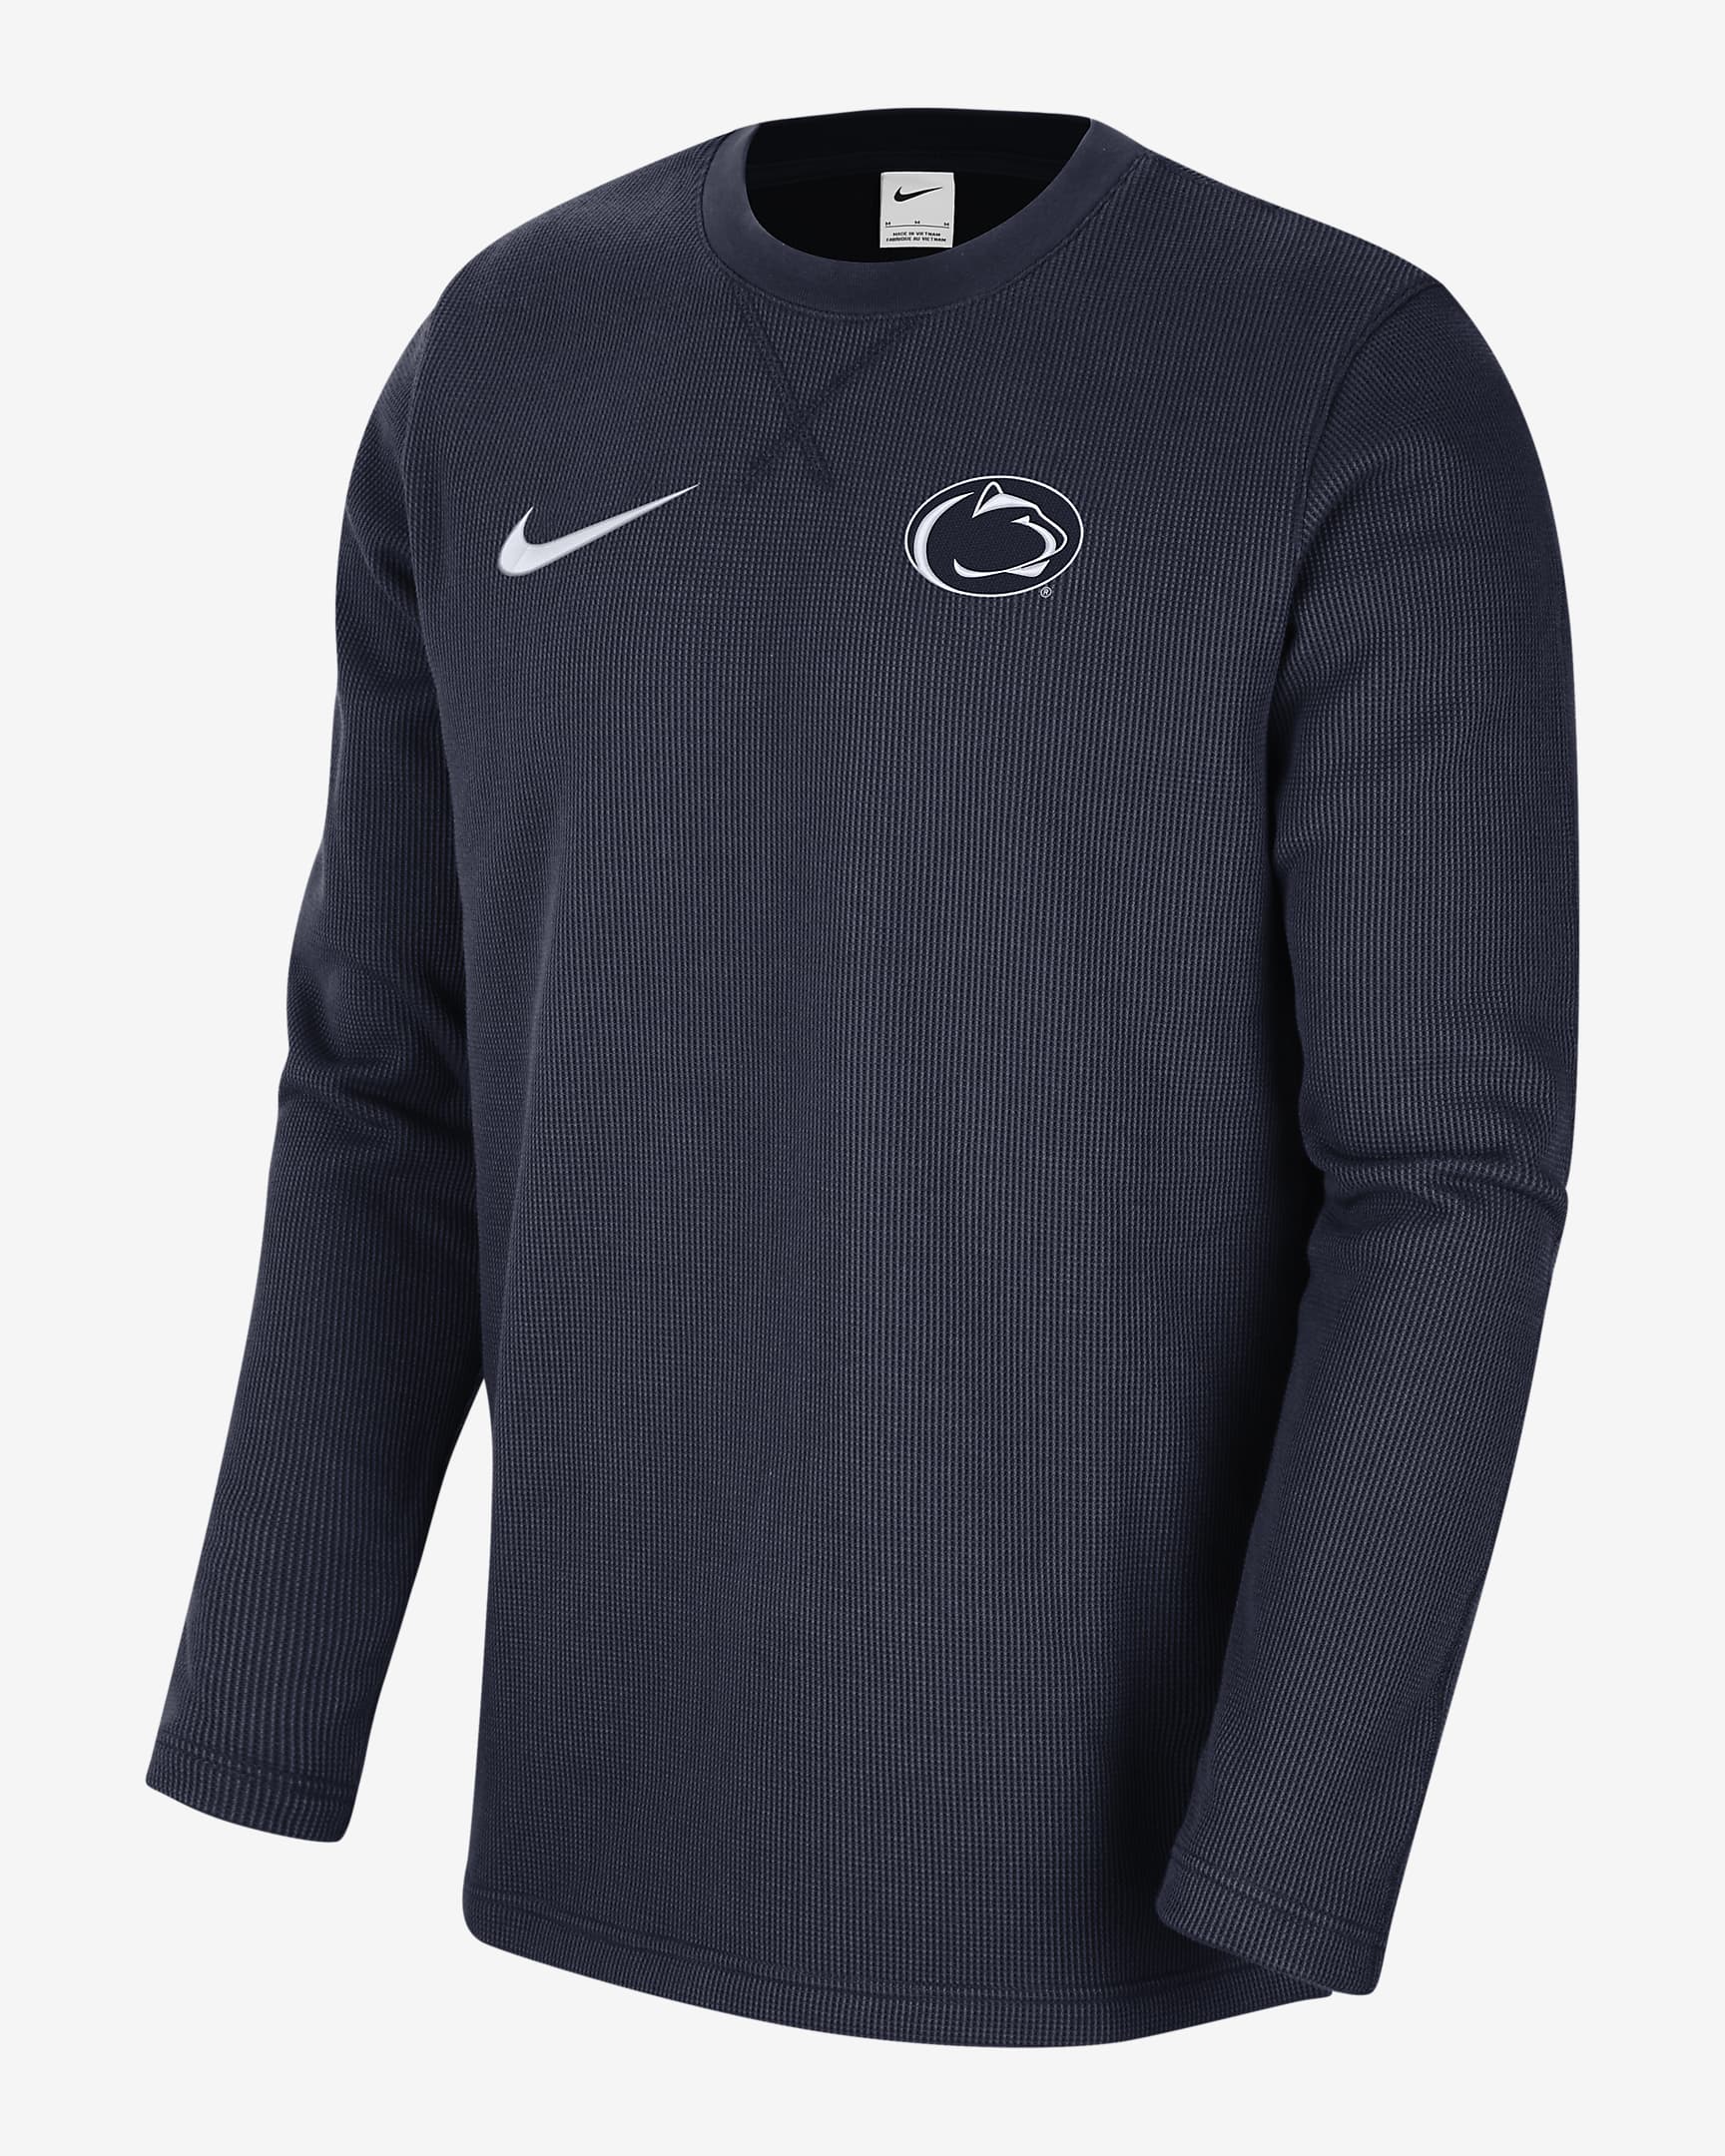 Penn State Men's Nike College Long-Sleeve Top. Nike.com